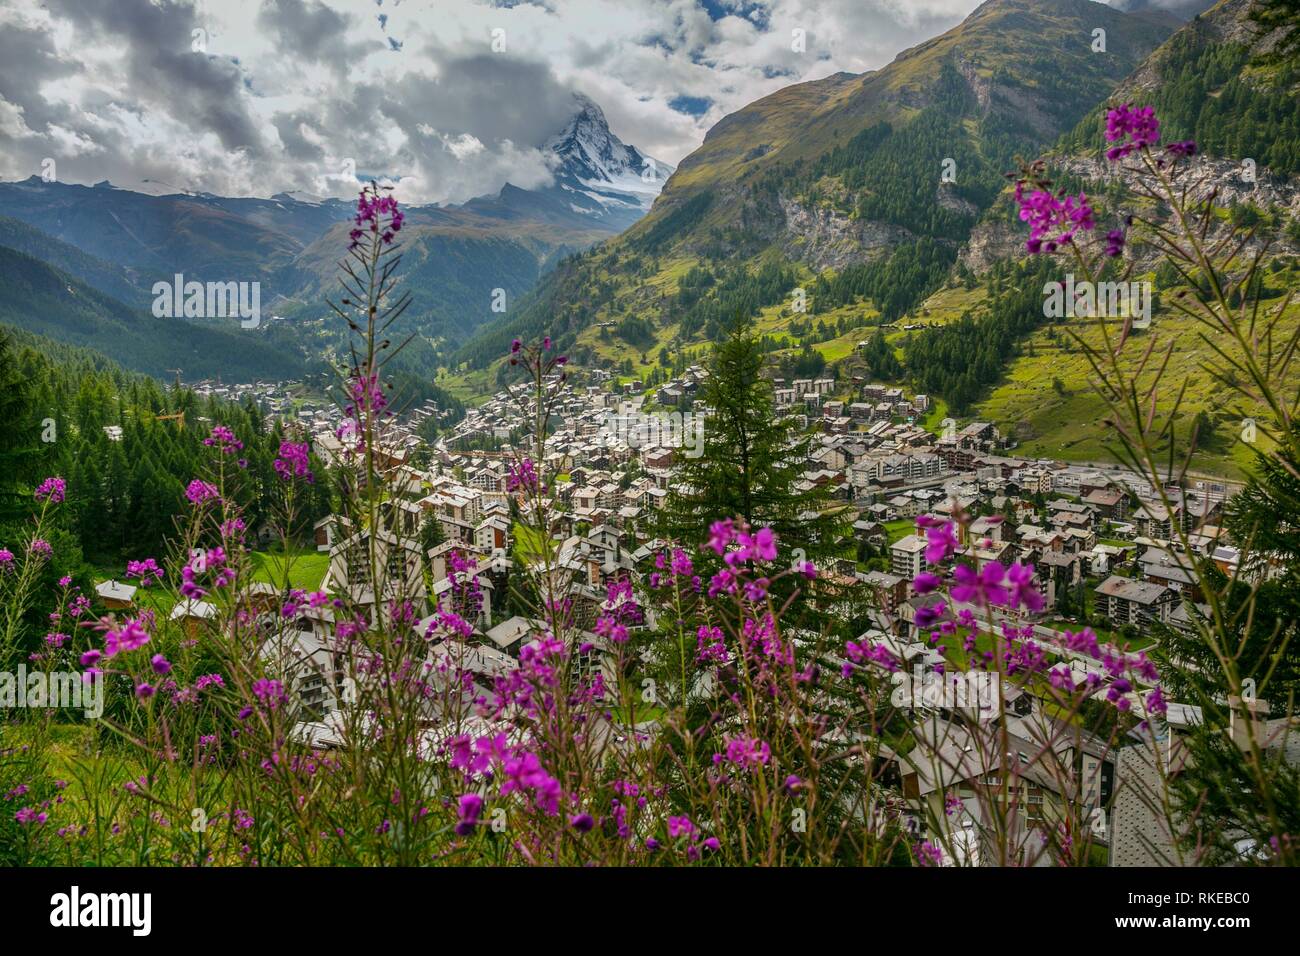 In the background Matterhorn mountain peak or Cervino mountain peak.View of Zermatt. Swiss Alps. Valais. Switzerland. Europe. Stock Photo